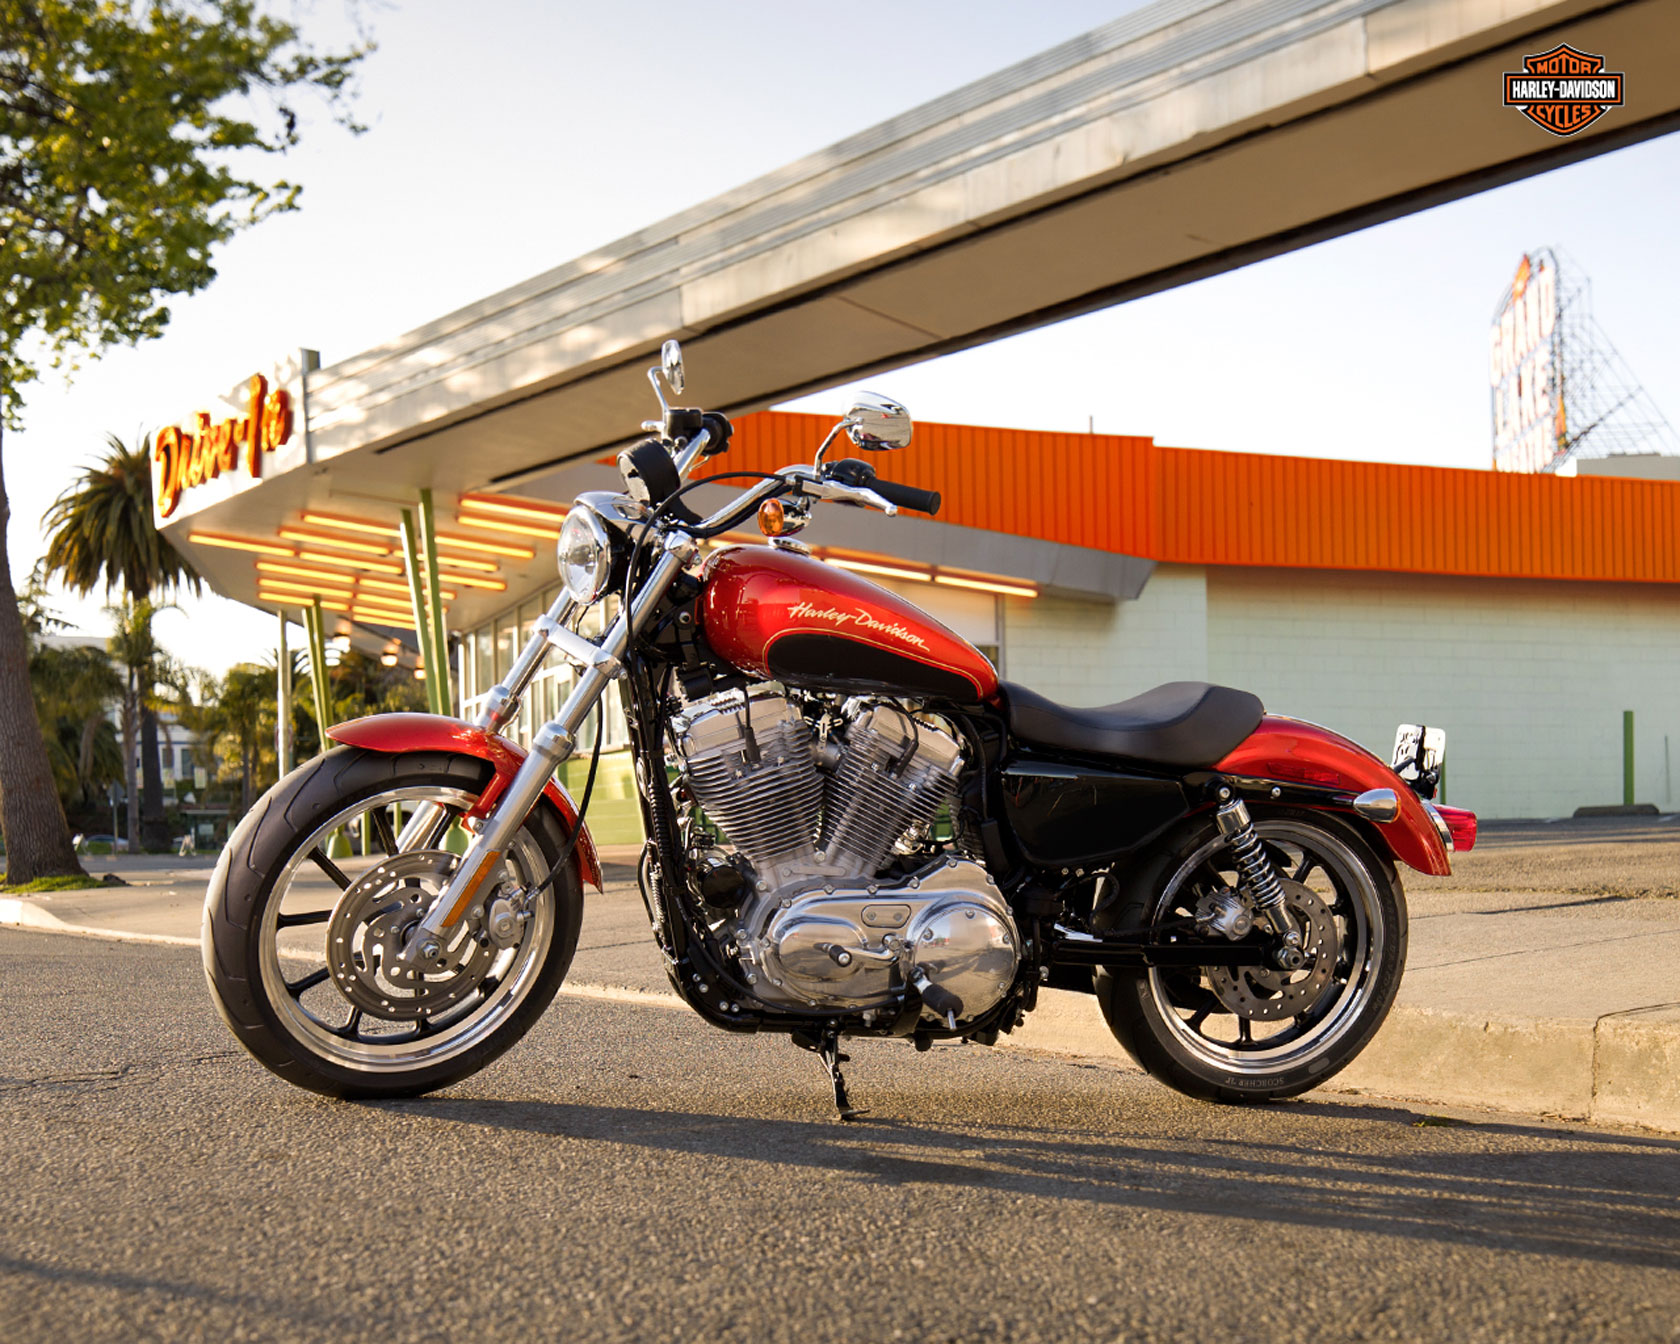 2013 Harley Davidson Xl883l Sportster 883 Superlow Review